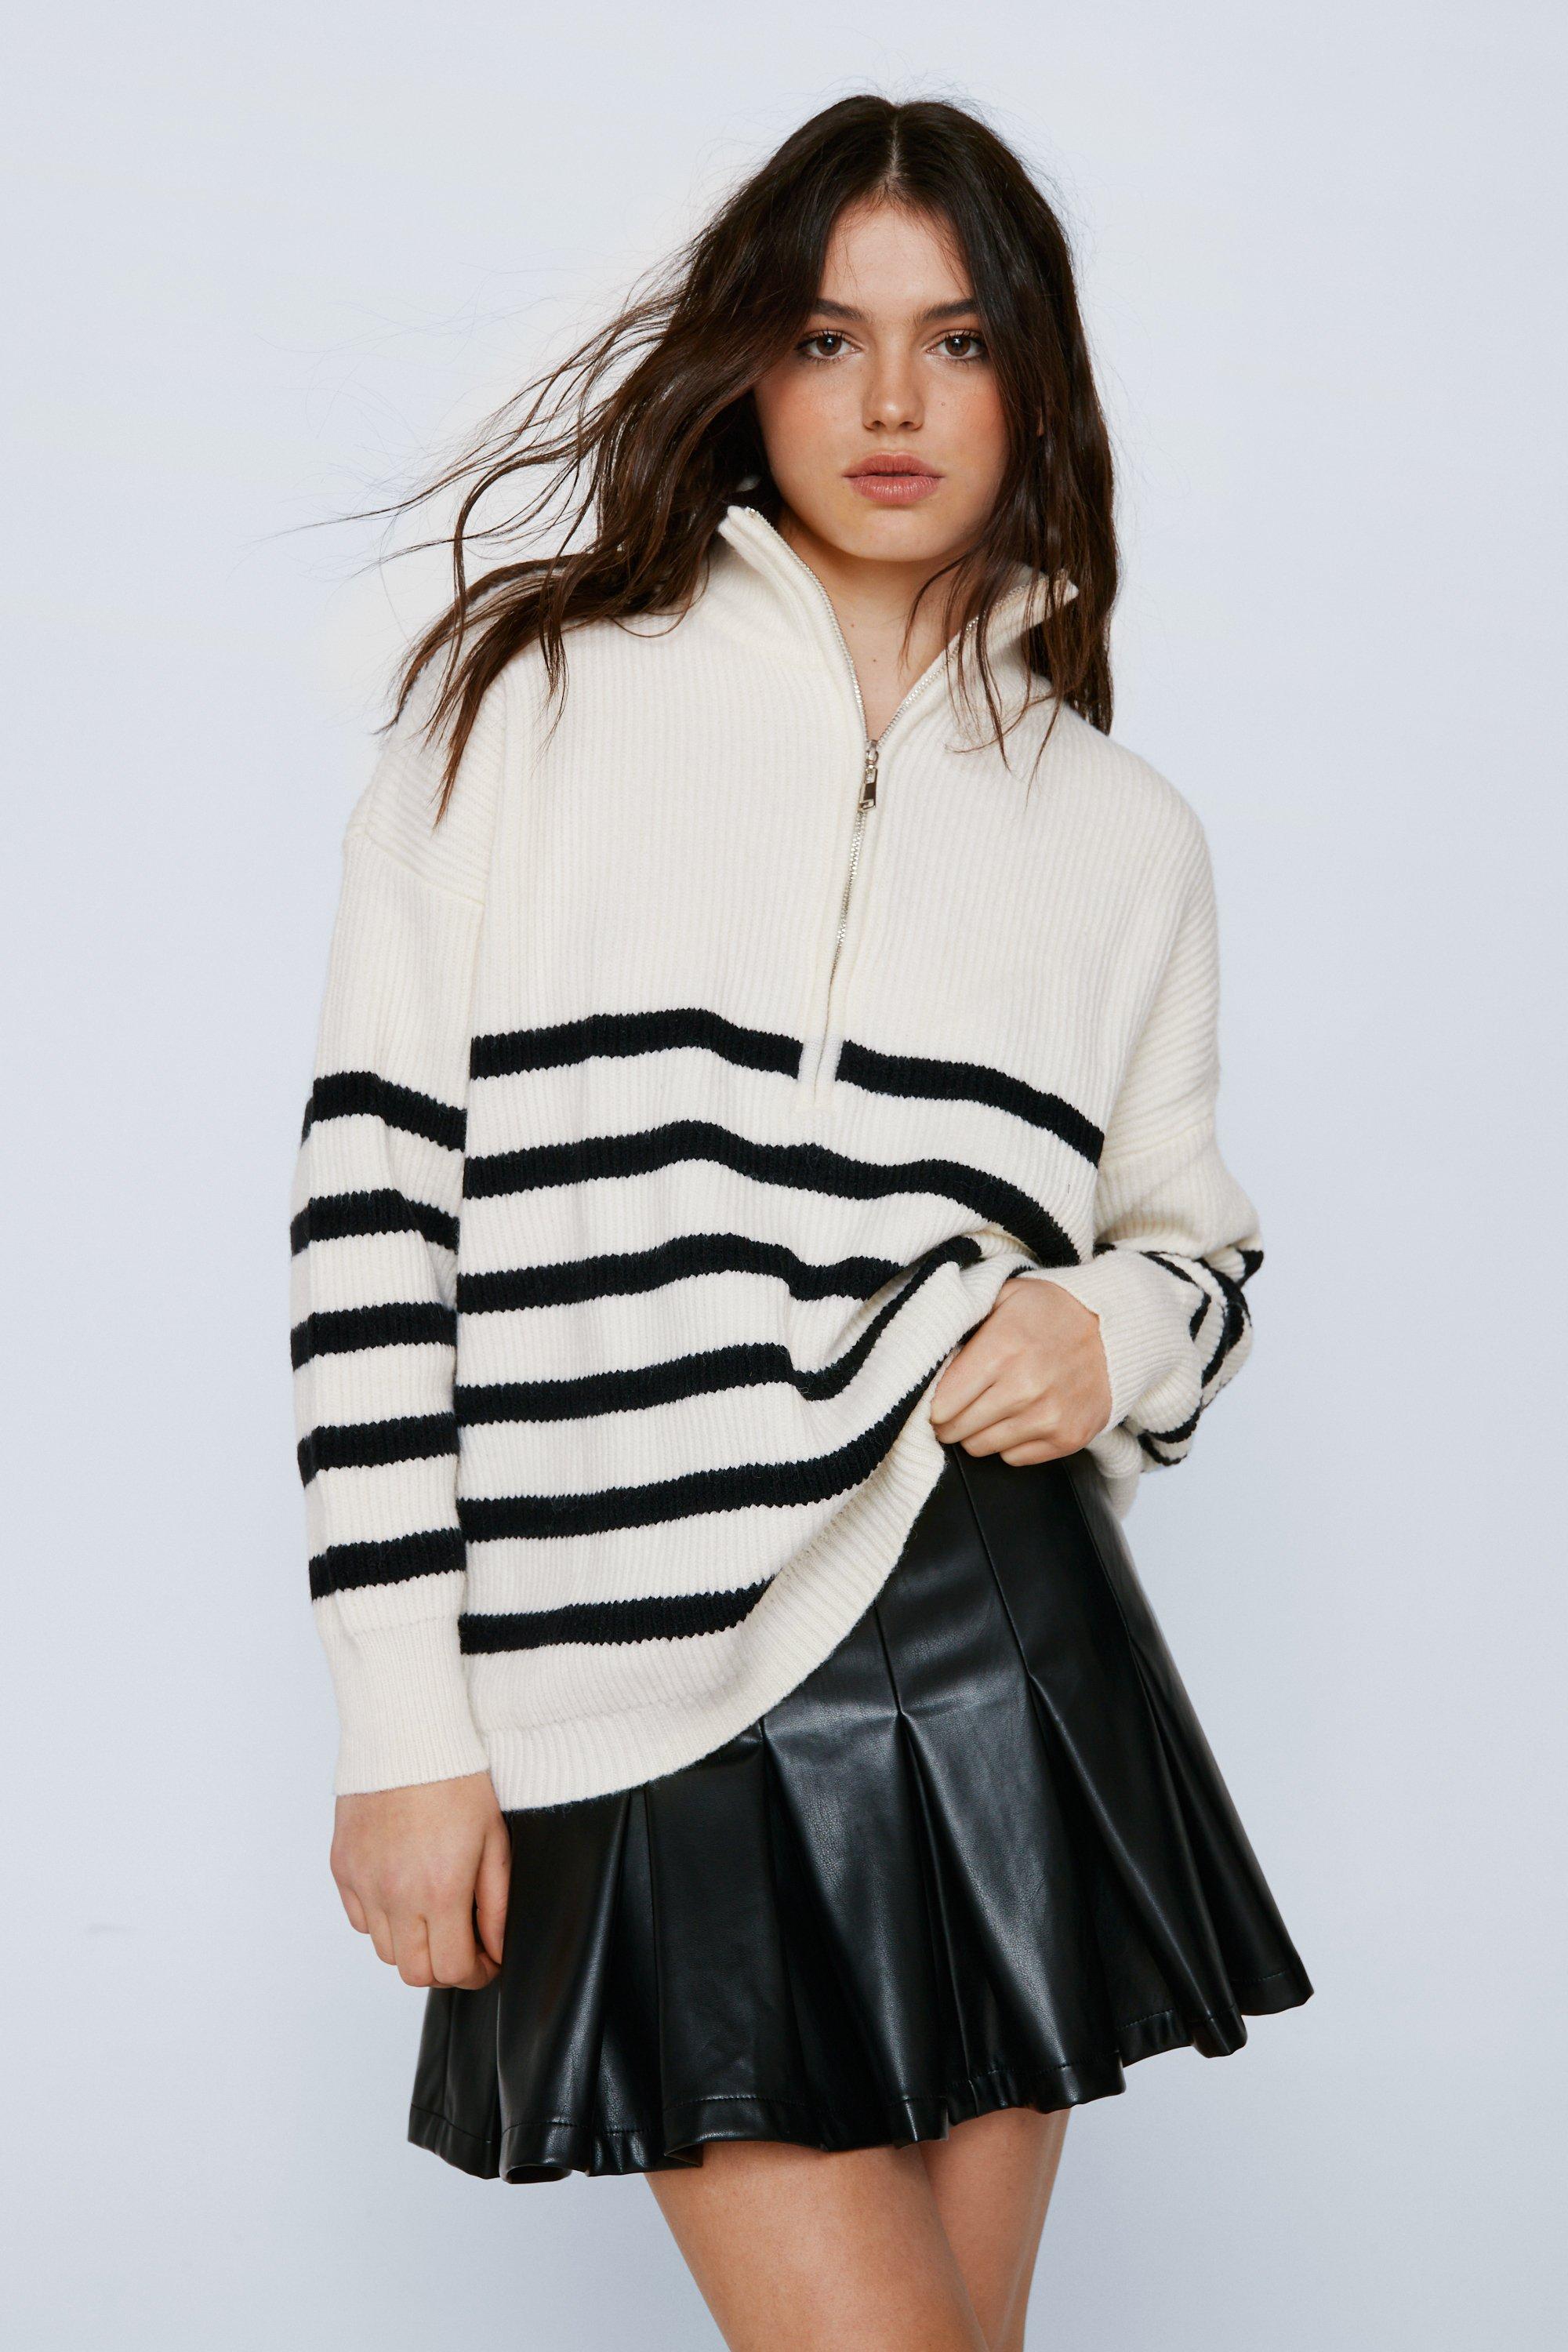 FAITHFULL THE BRAND Erika Knit Sweater in Off White Stripe